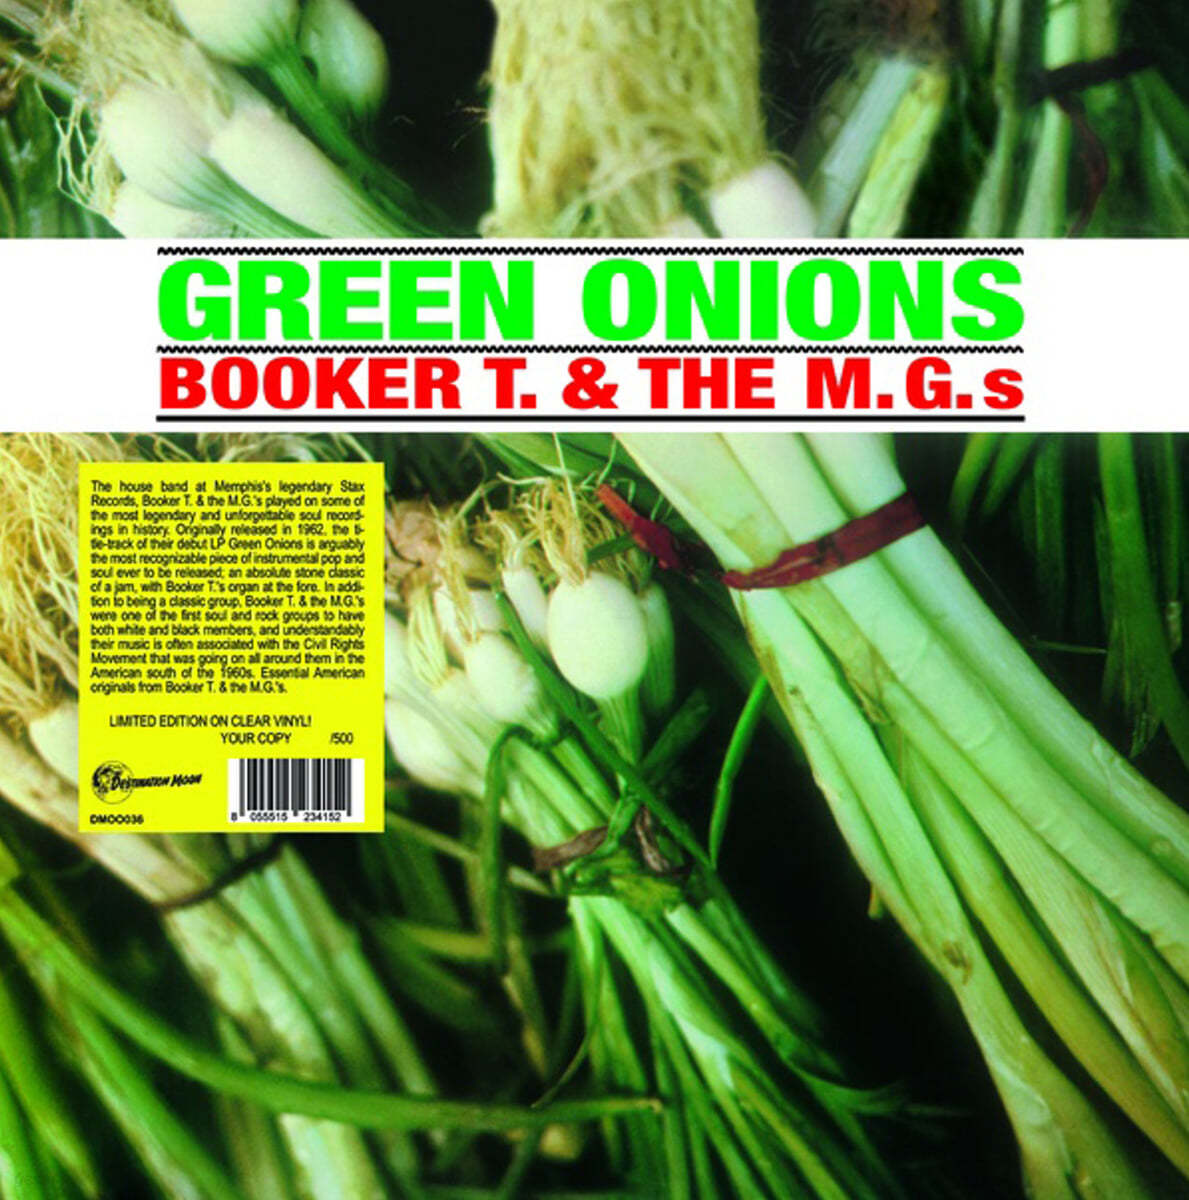 Booker T. & The M.G.s (부커 티 앤 더 엠지스) - Green Onions [투명 컬러 LP]